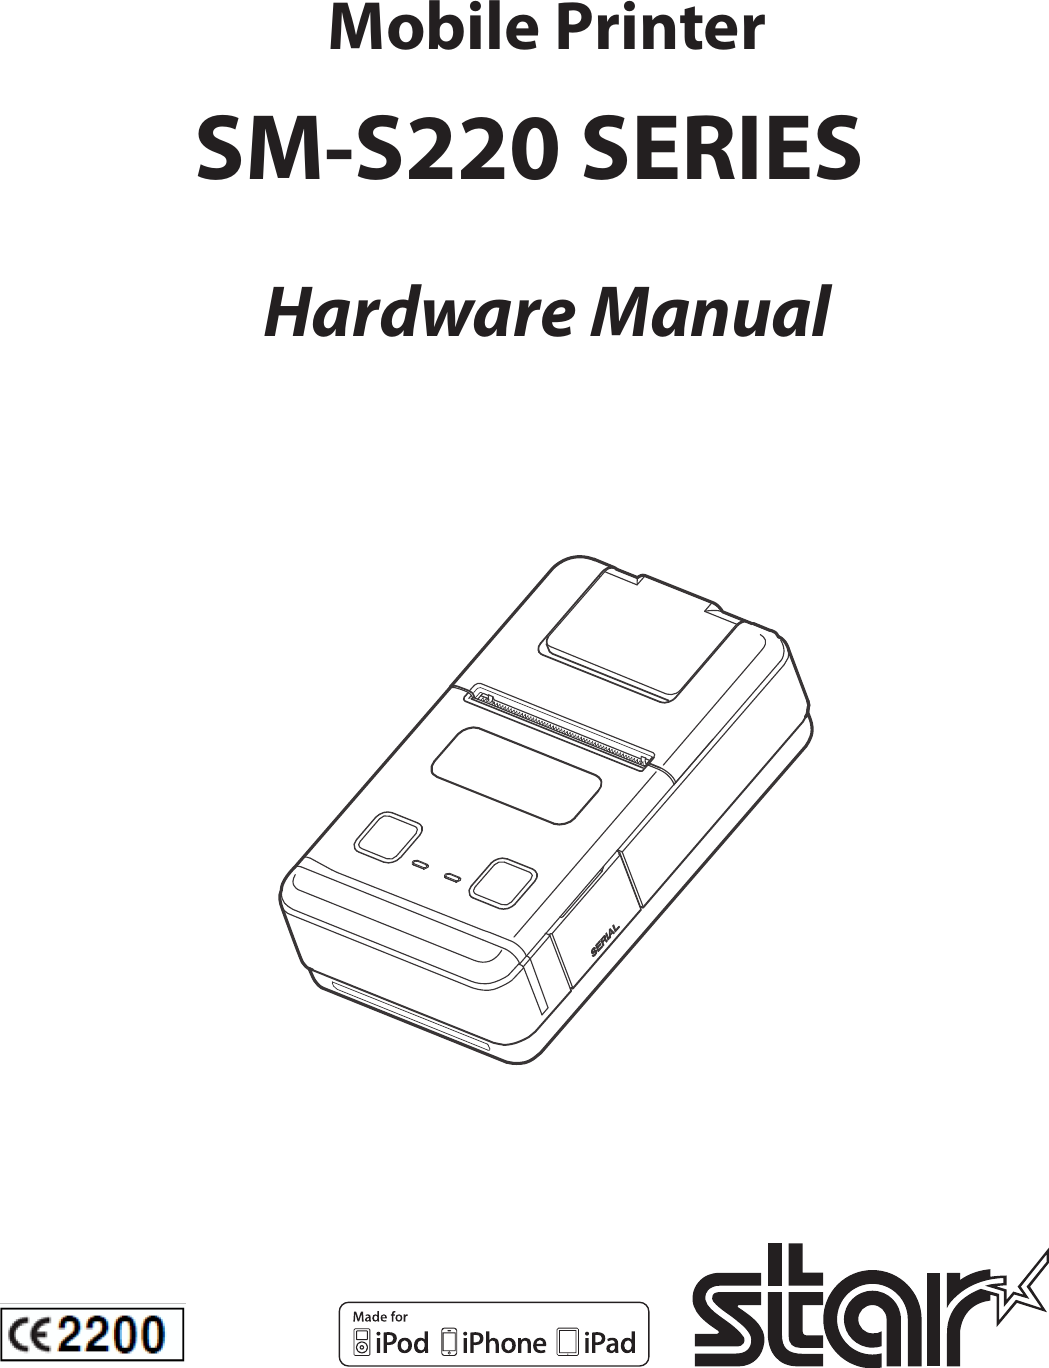 Mobile PrinterSM-S220 SERIES       Hardware Manual